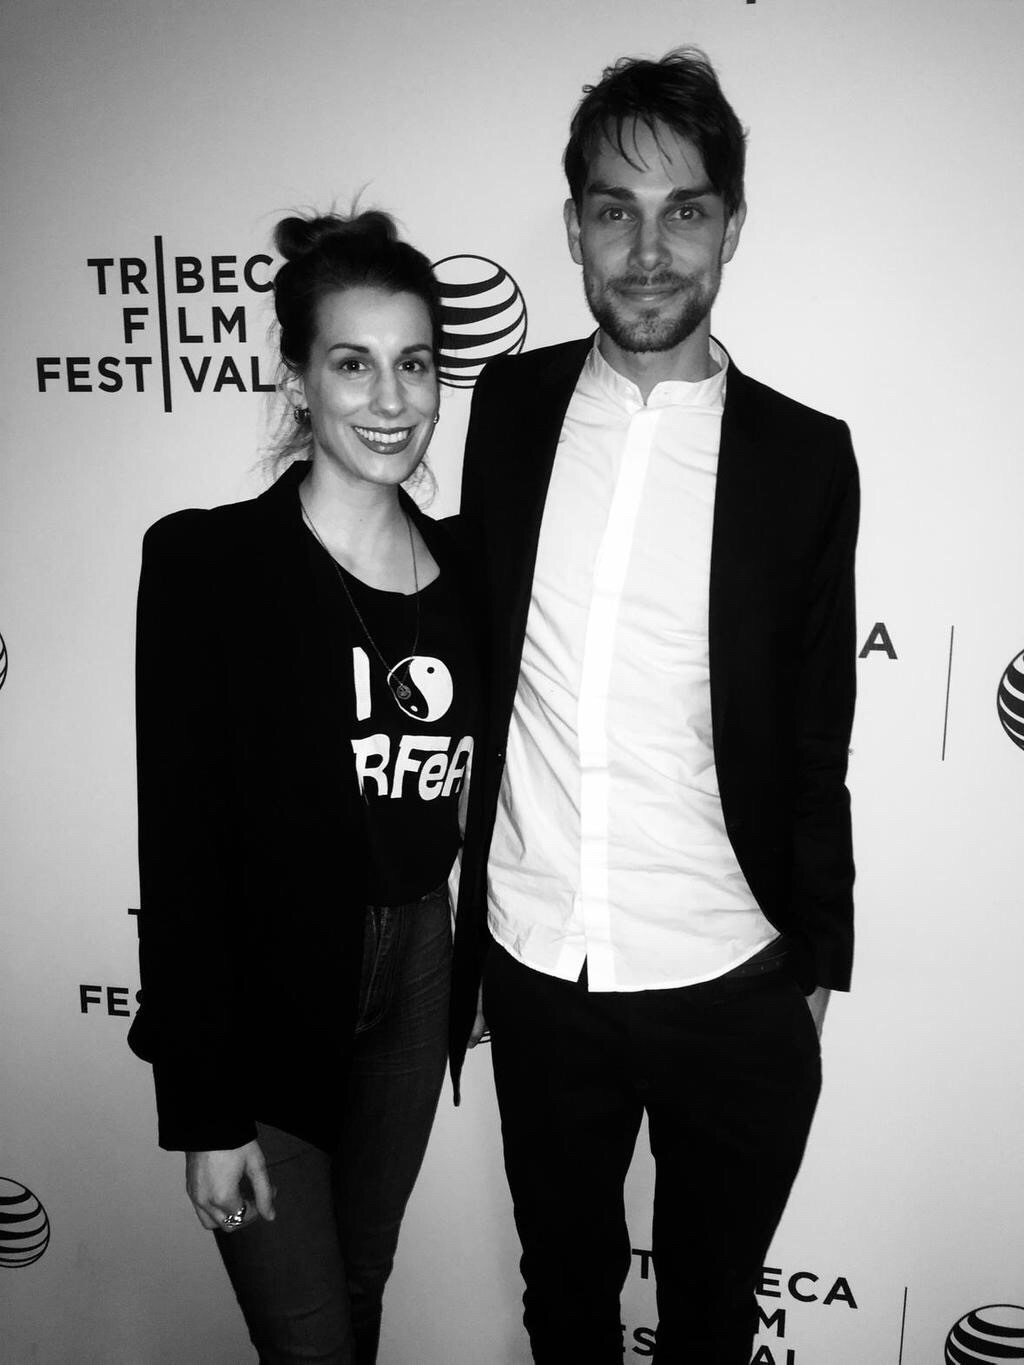 Atending Tribeca Film Festival with Rebecca Steele